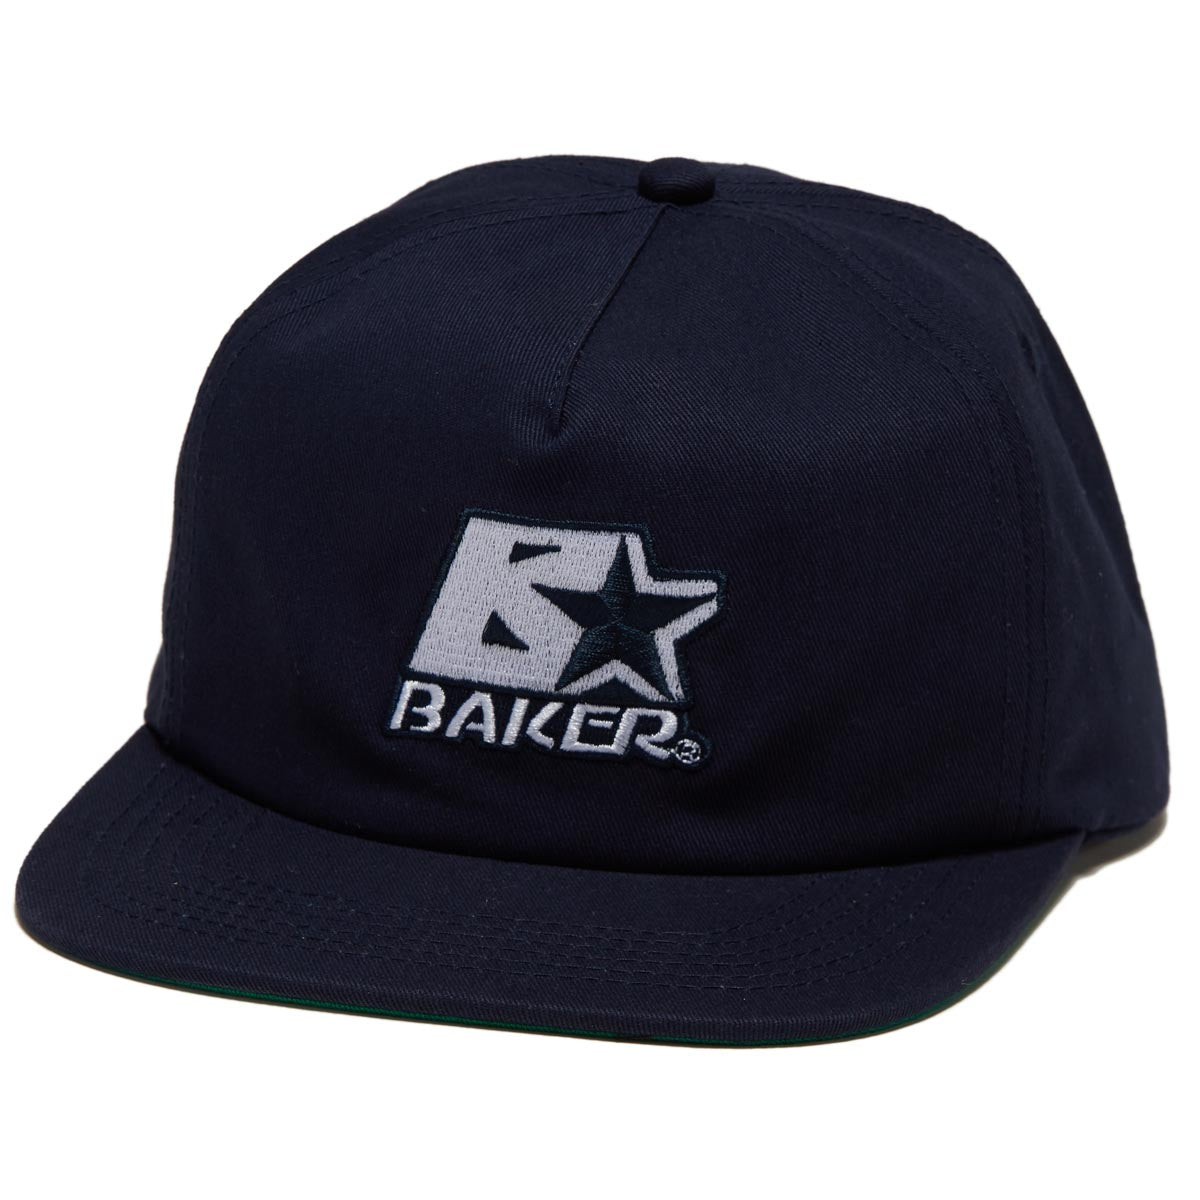 Baker Classic Hat - Navy image 1